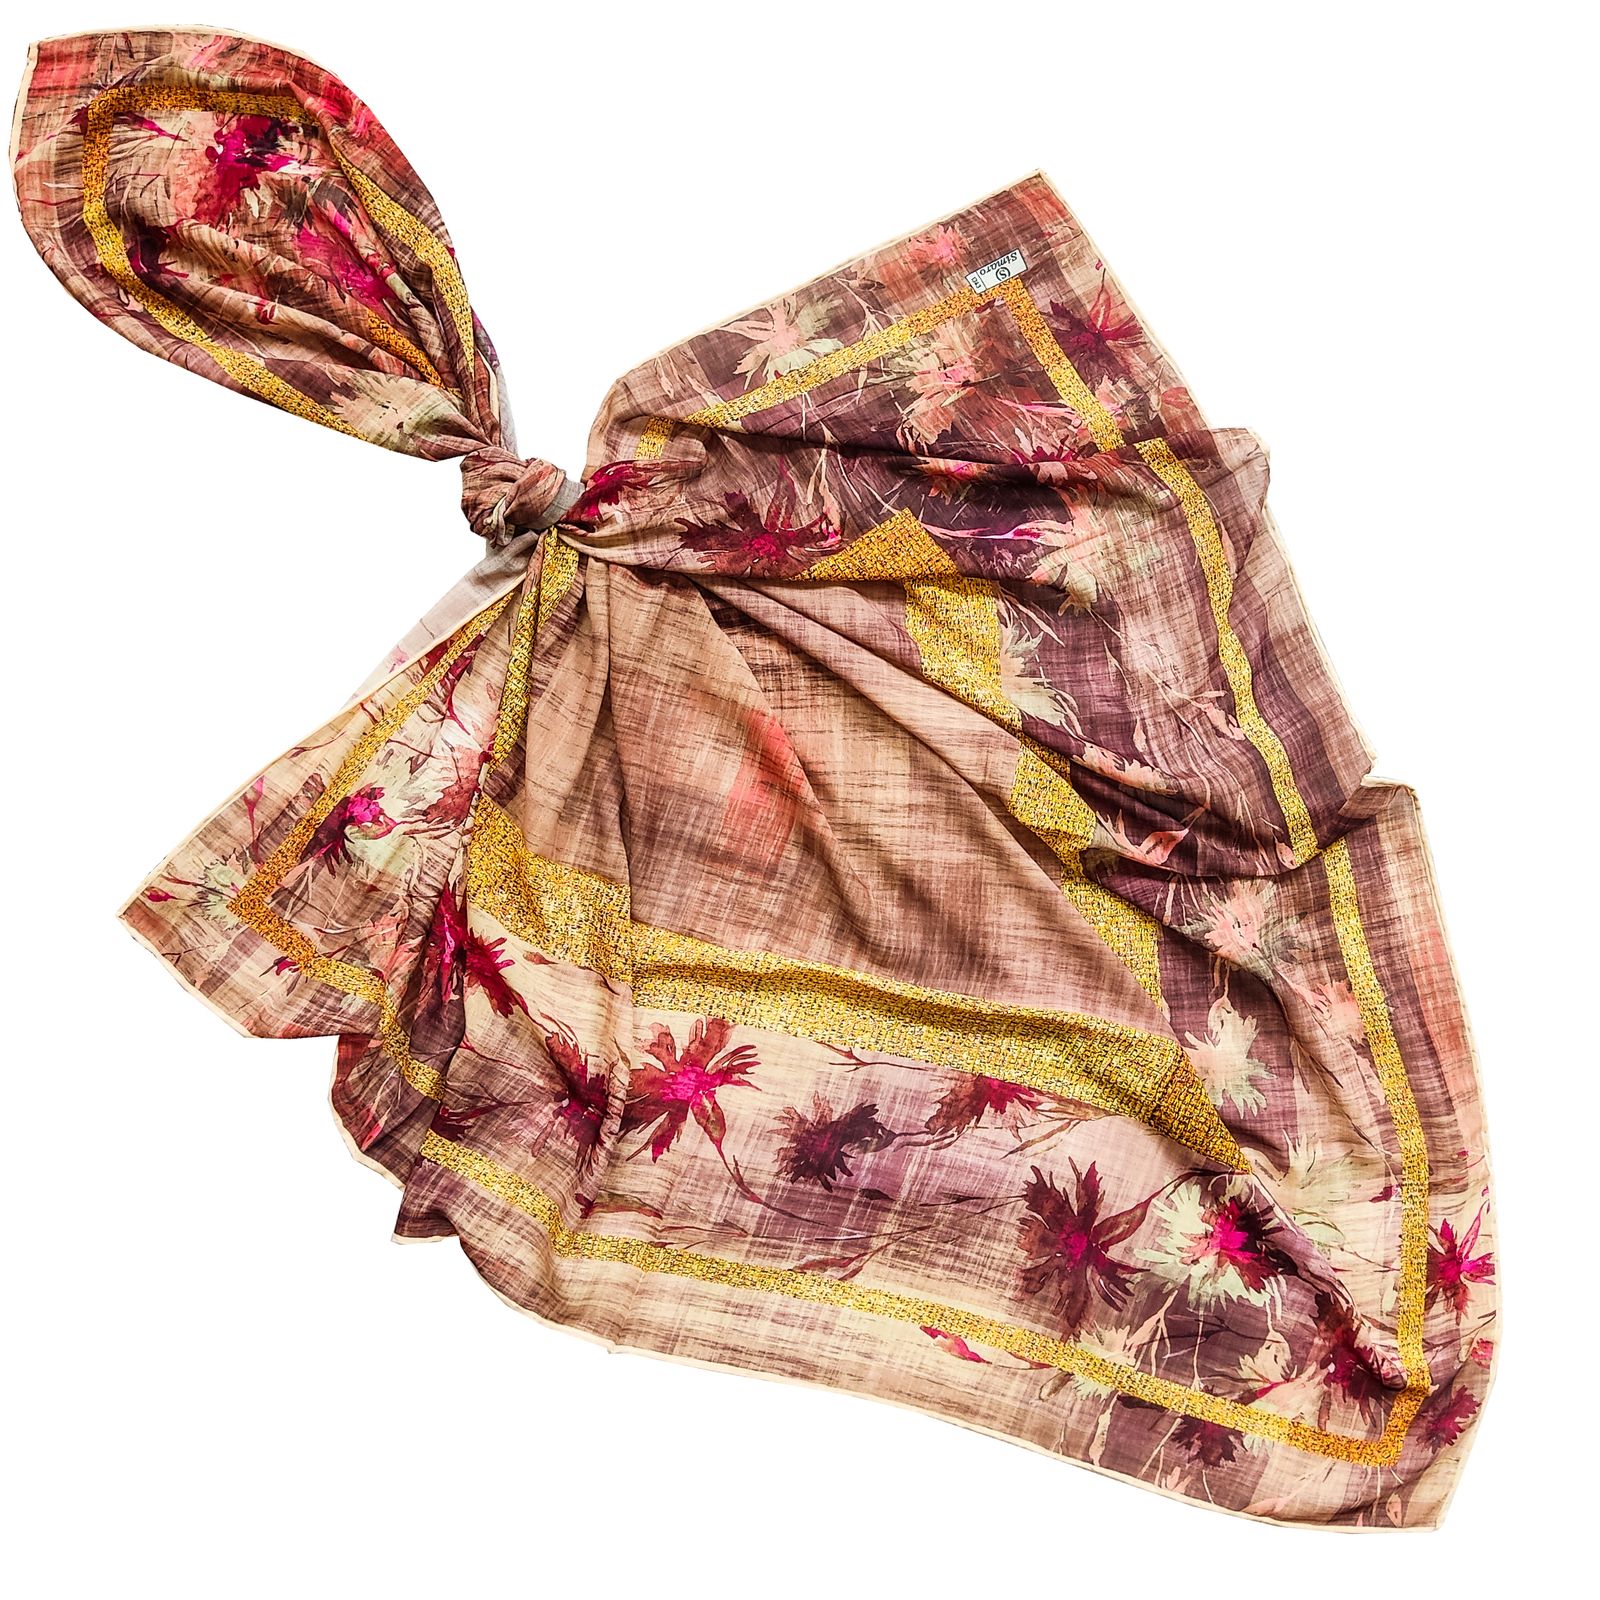 روسری زنانه مدل حریر ابریشم مجلسی کد 1161 -  - 1